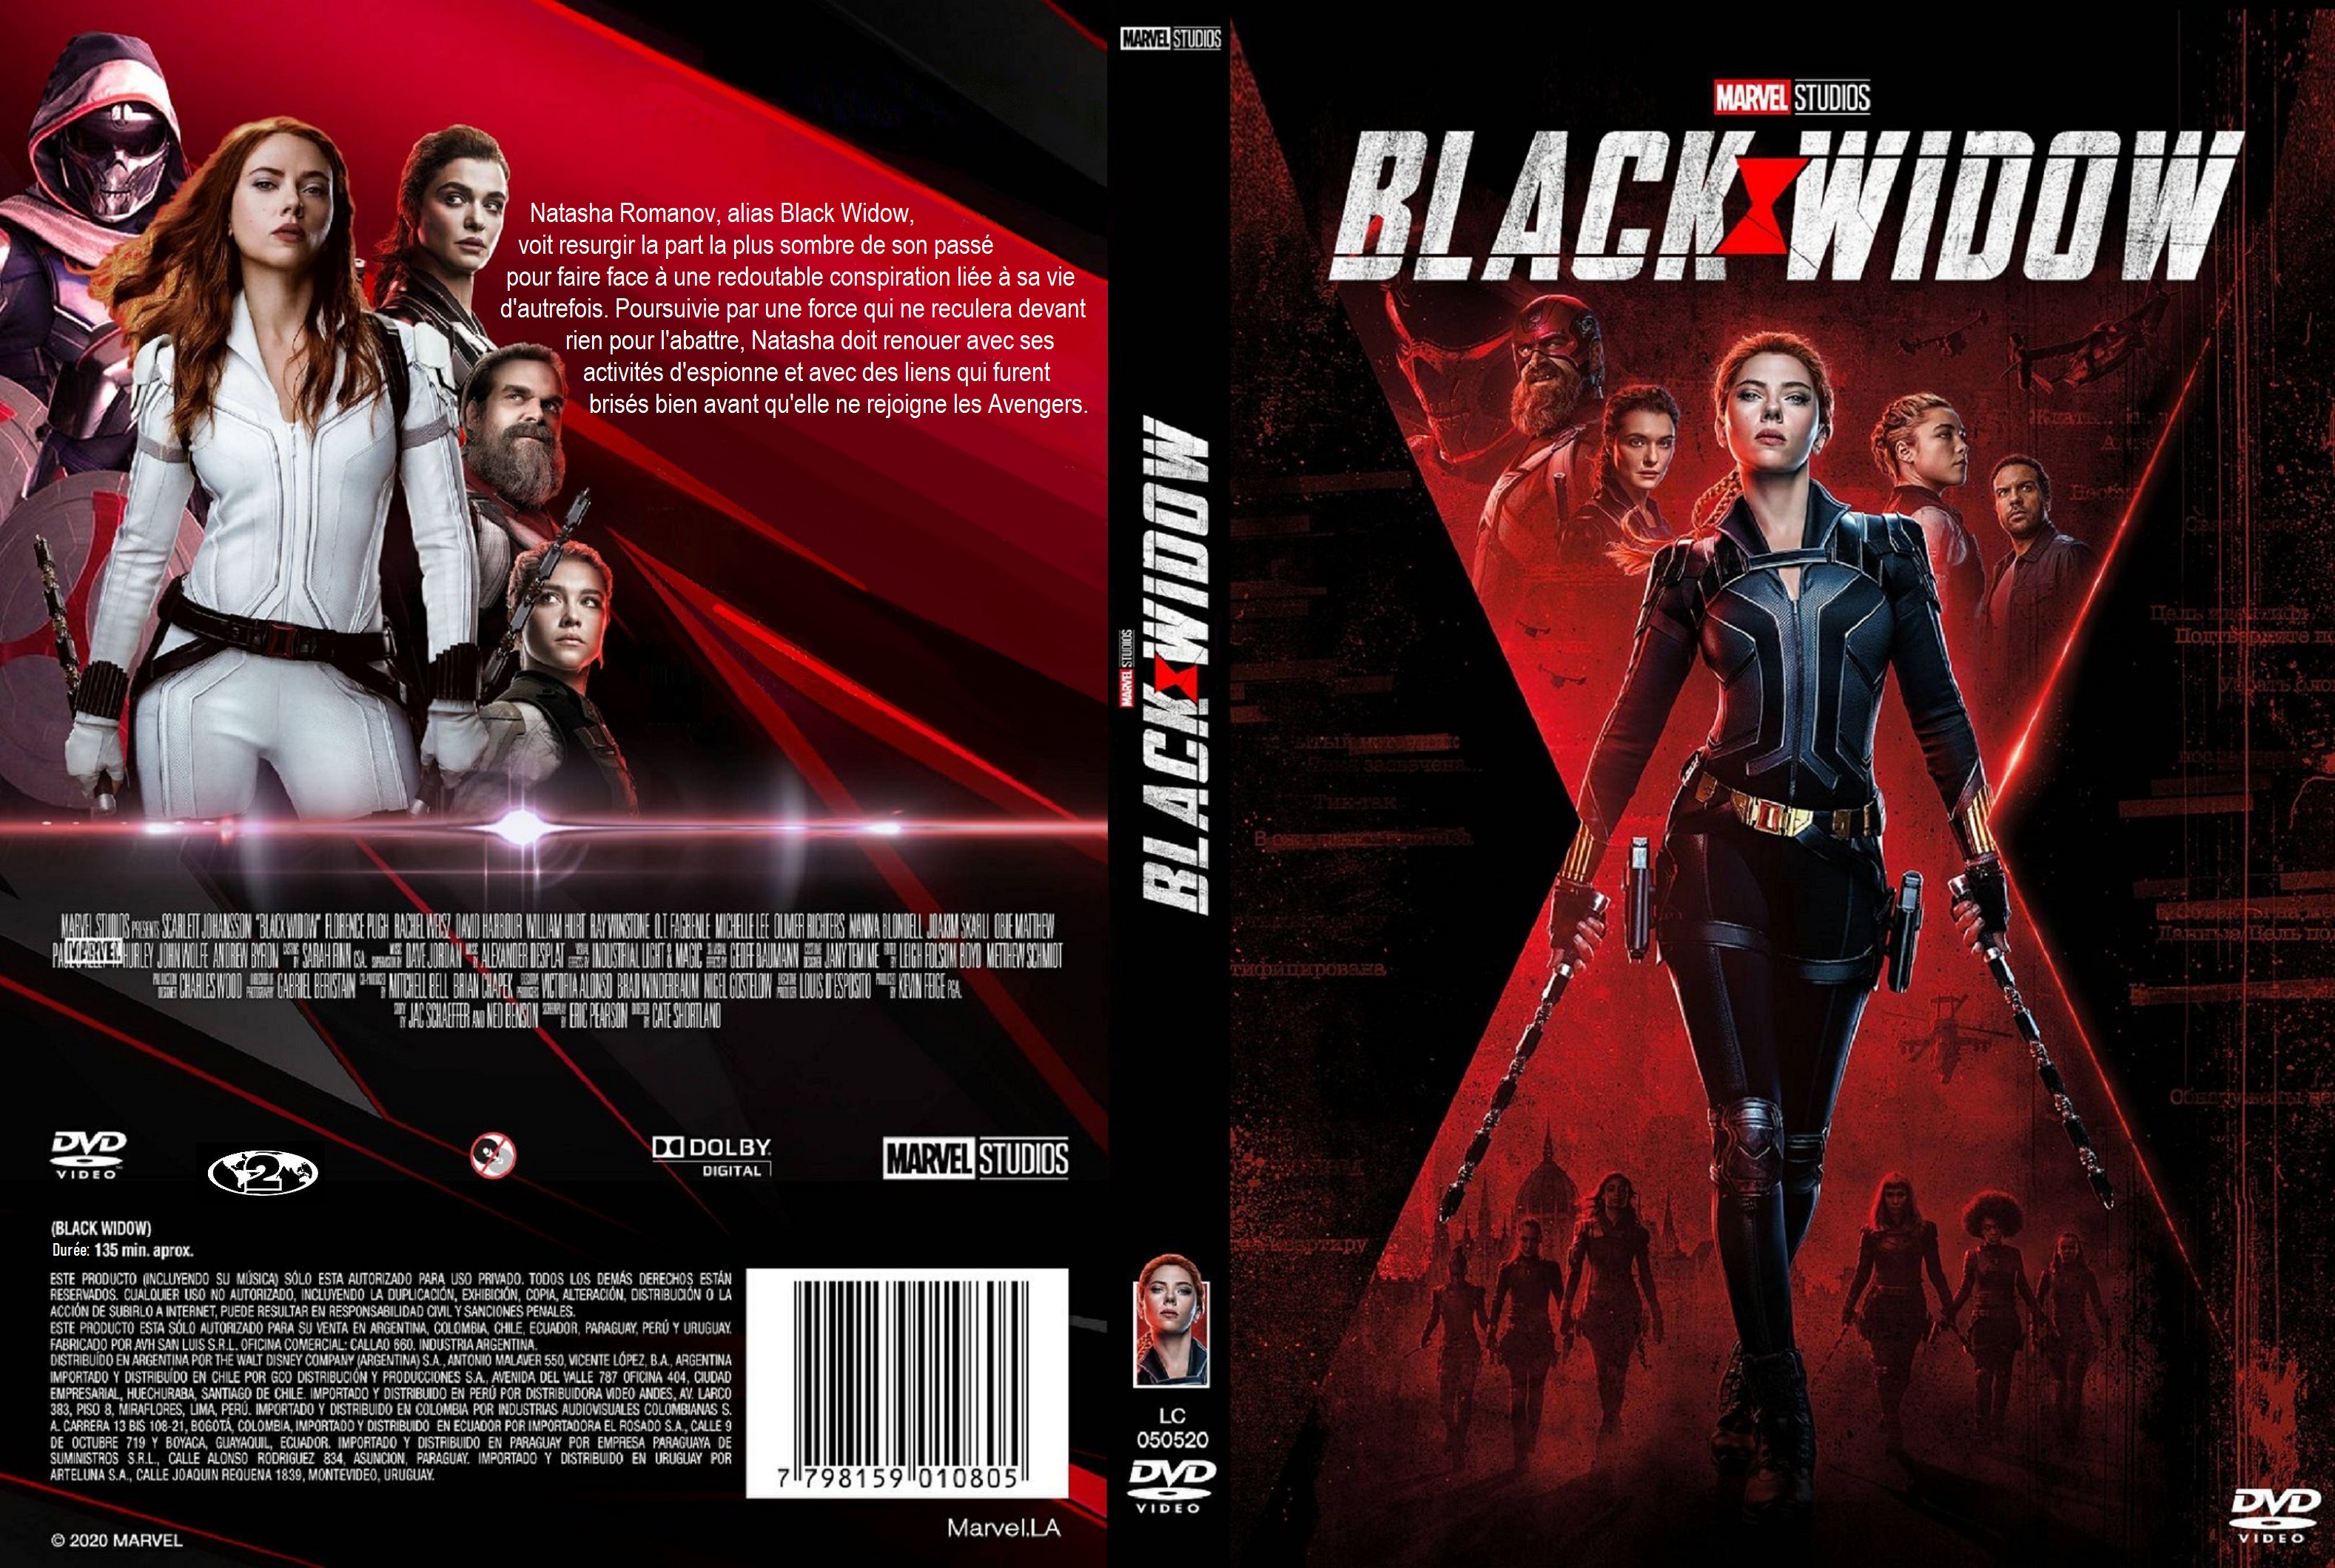 Jaquette DVD Black Widow custom